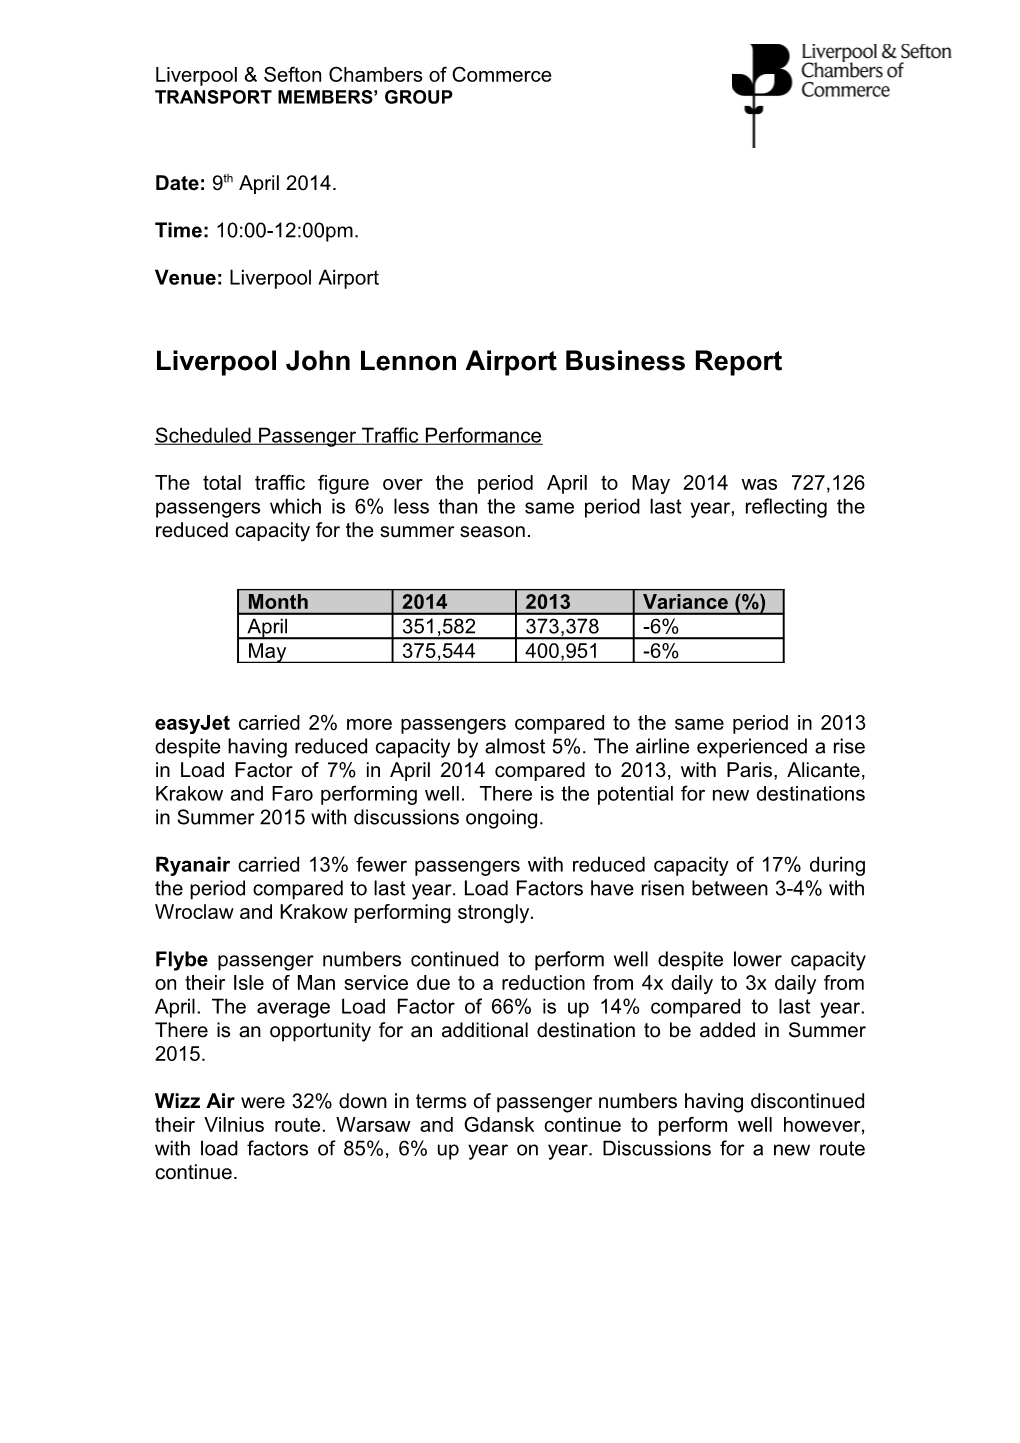 Liverpool John Lennon Airport Business Report